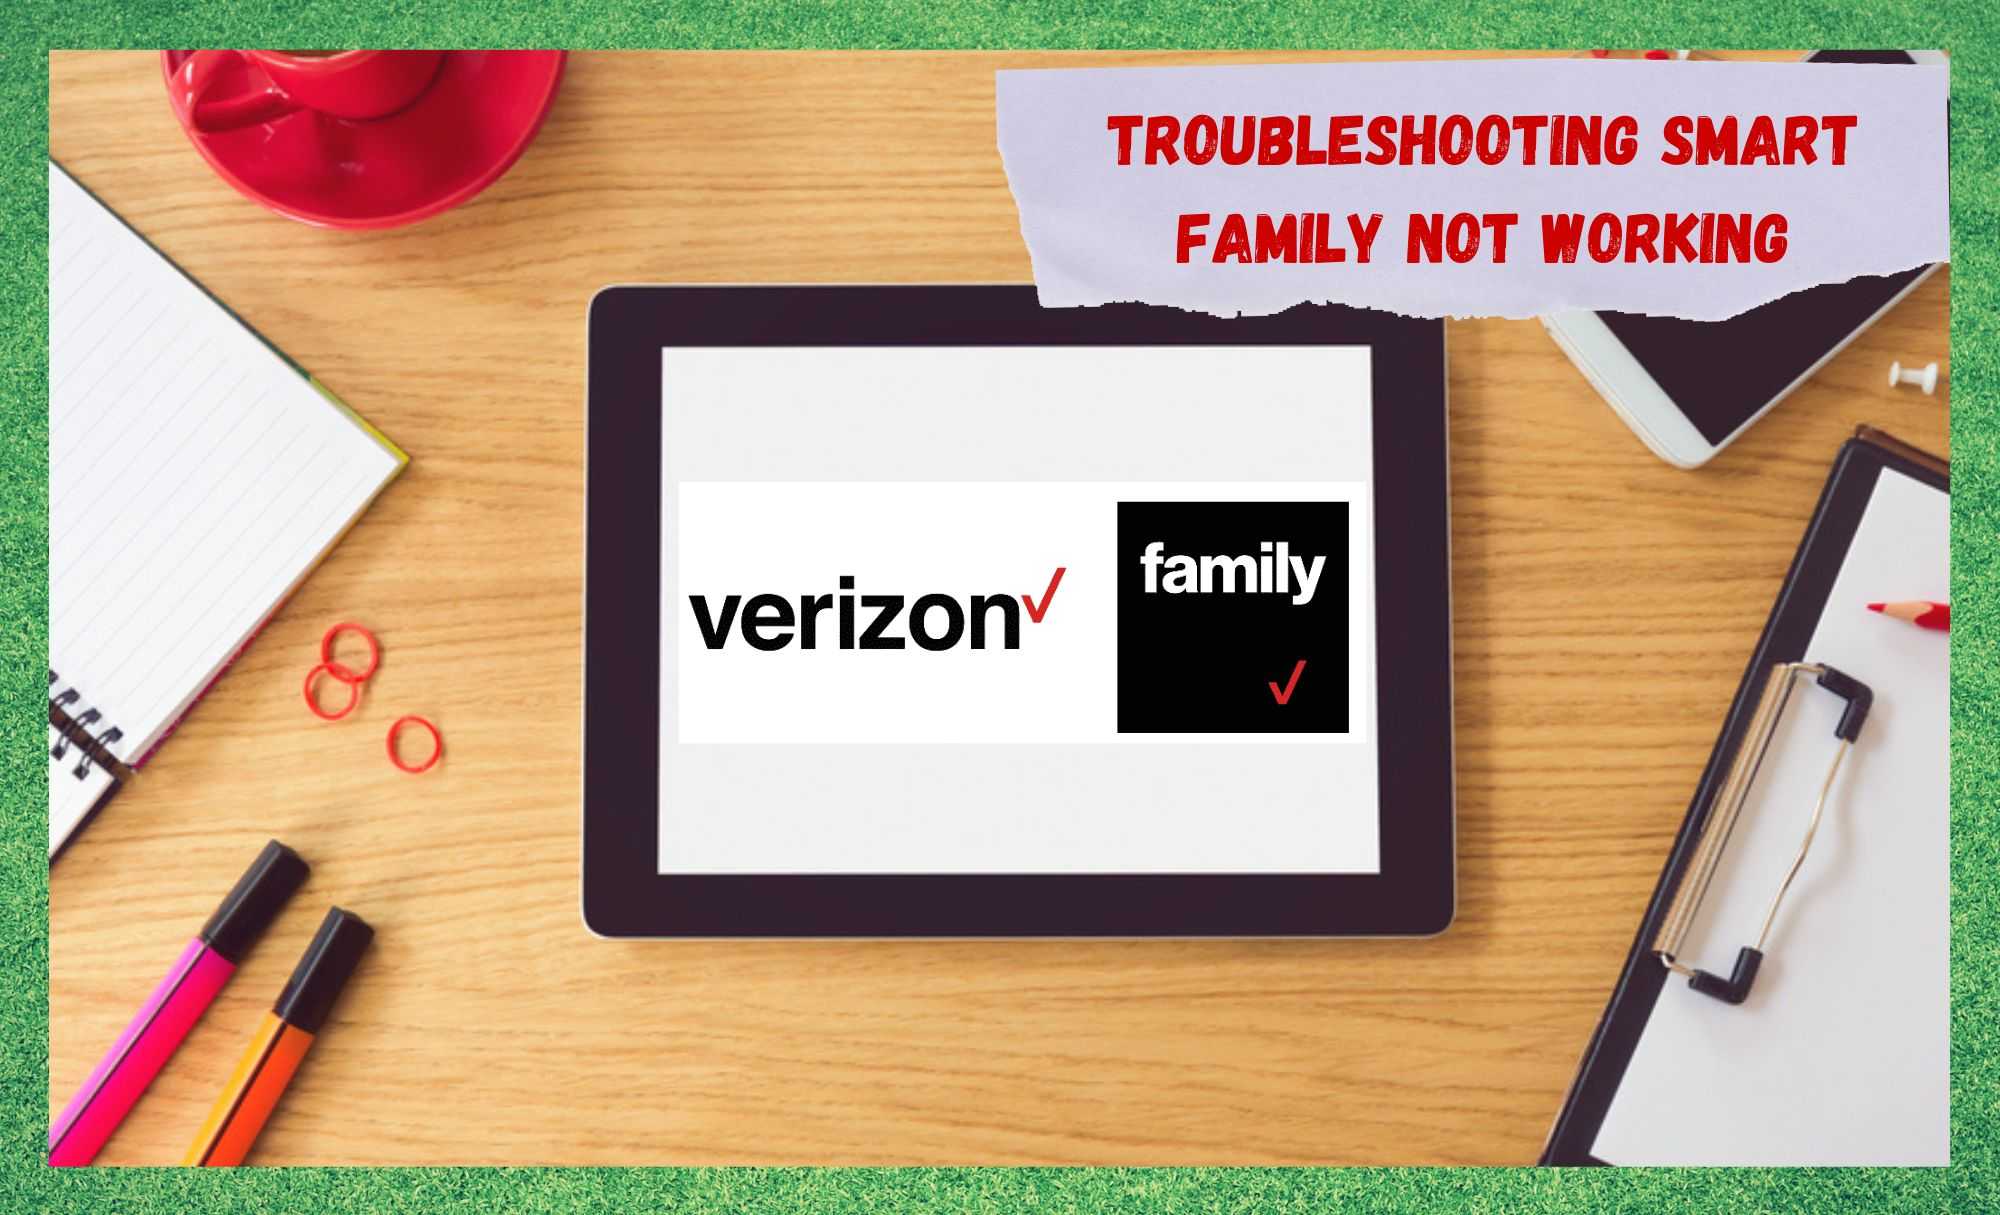 Verizon Smart Family មិនដំណើរការ៖ វិធី 7 យ៉ាងដើម្បីជួសជុល